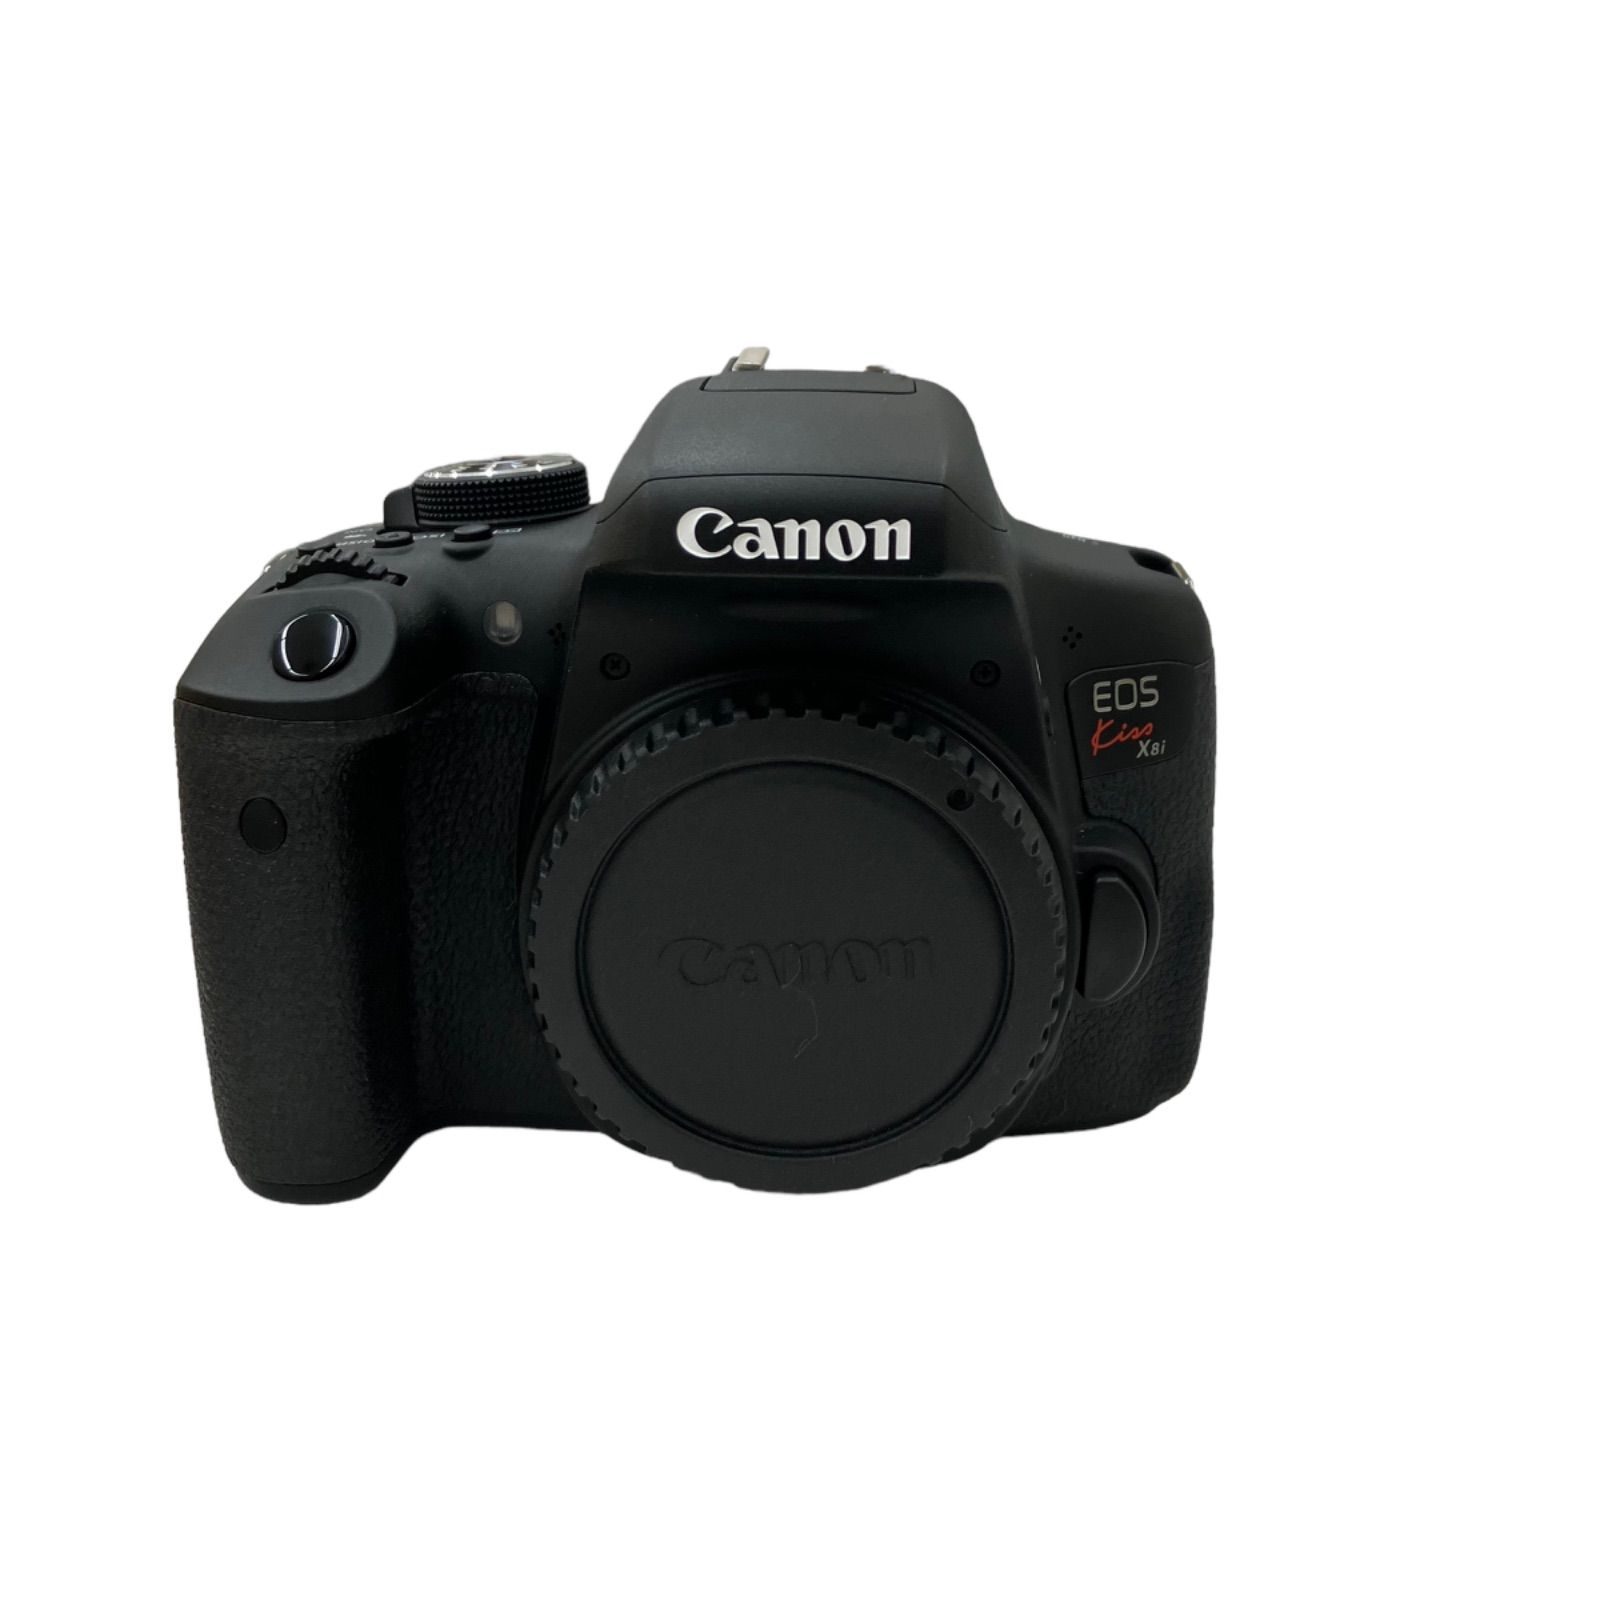 Canon EOS kissX８i ダブルズームキット 通電確認済み - メルカリ